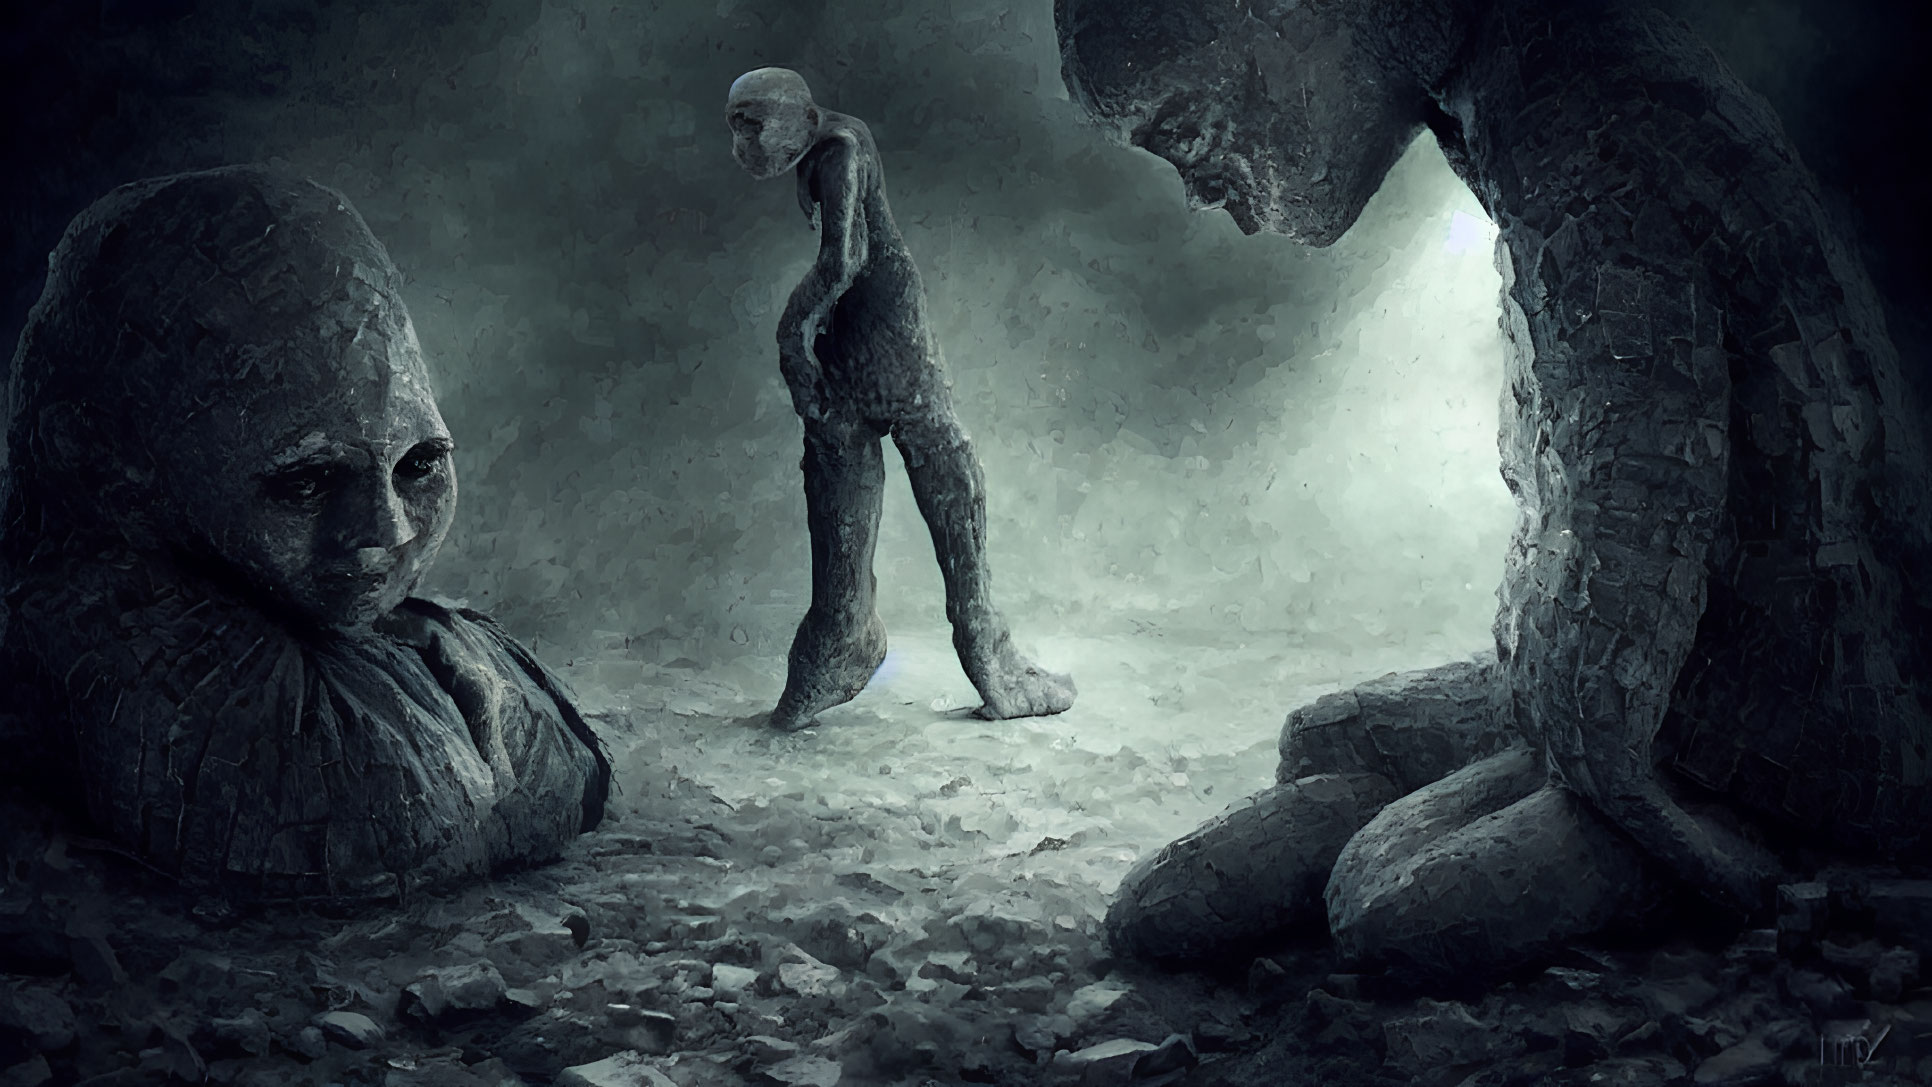 Three humanoid figures with textured skin in dark, moody setting